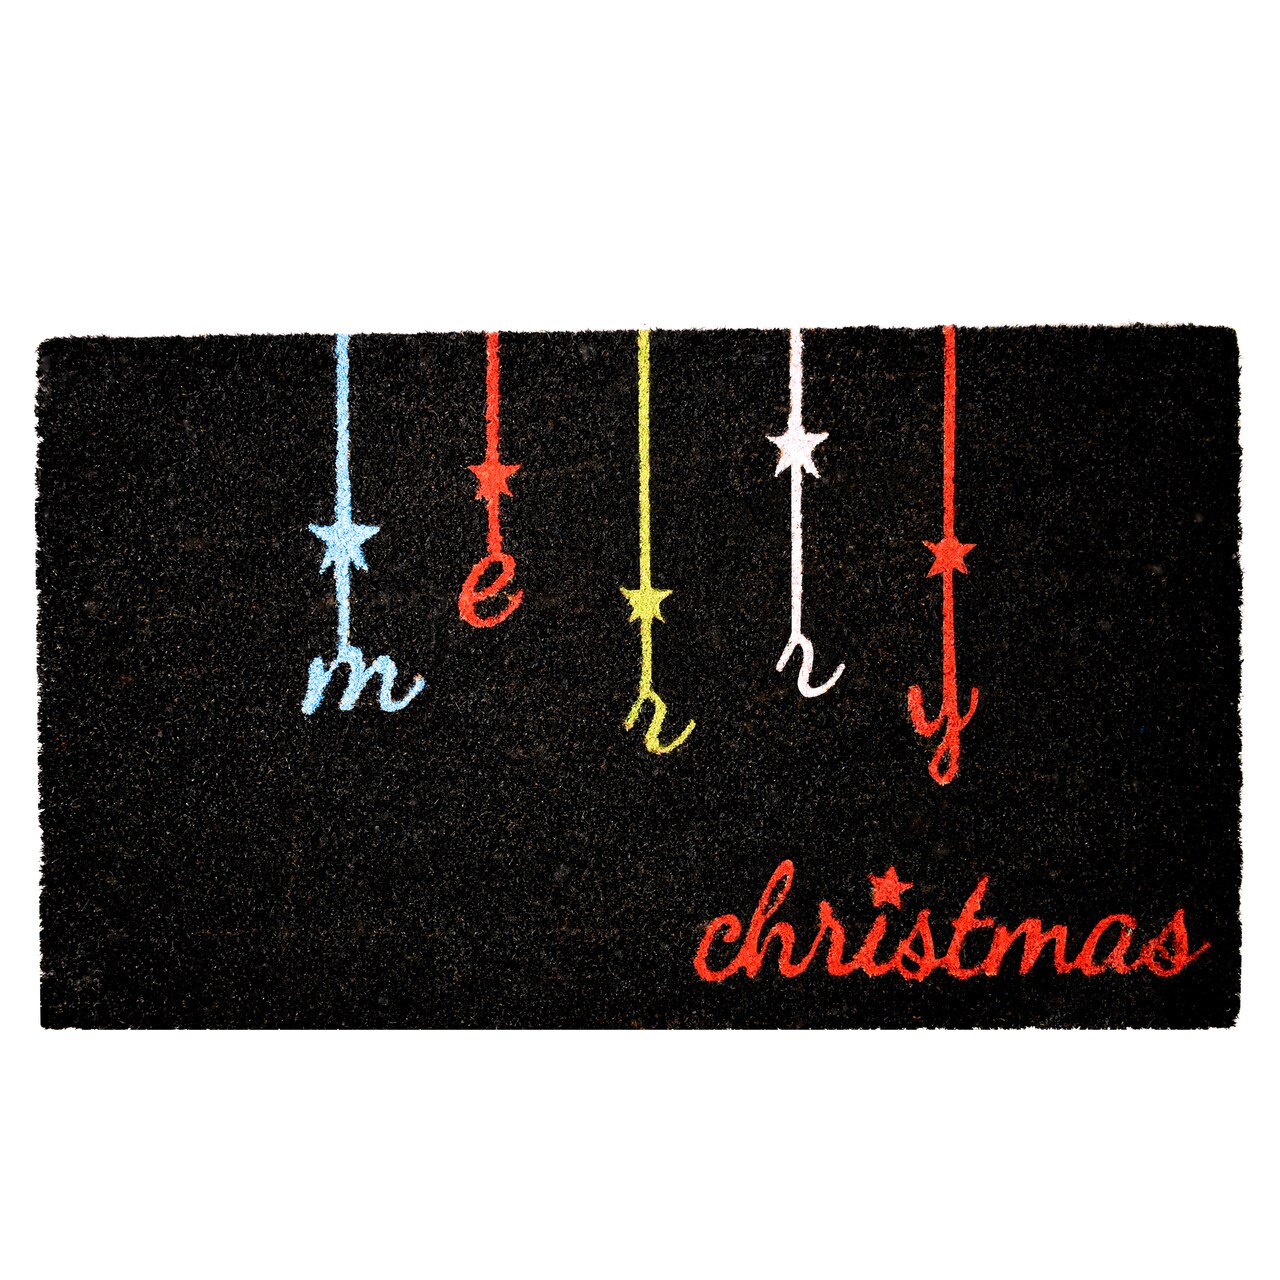 Whimsical Christmas Doormat